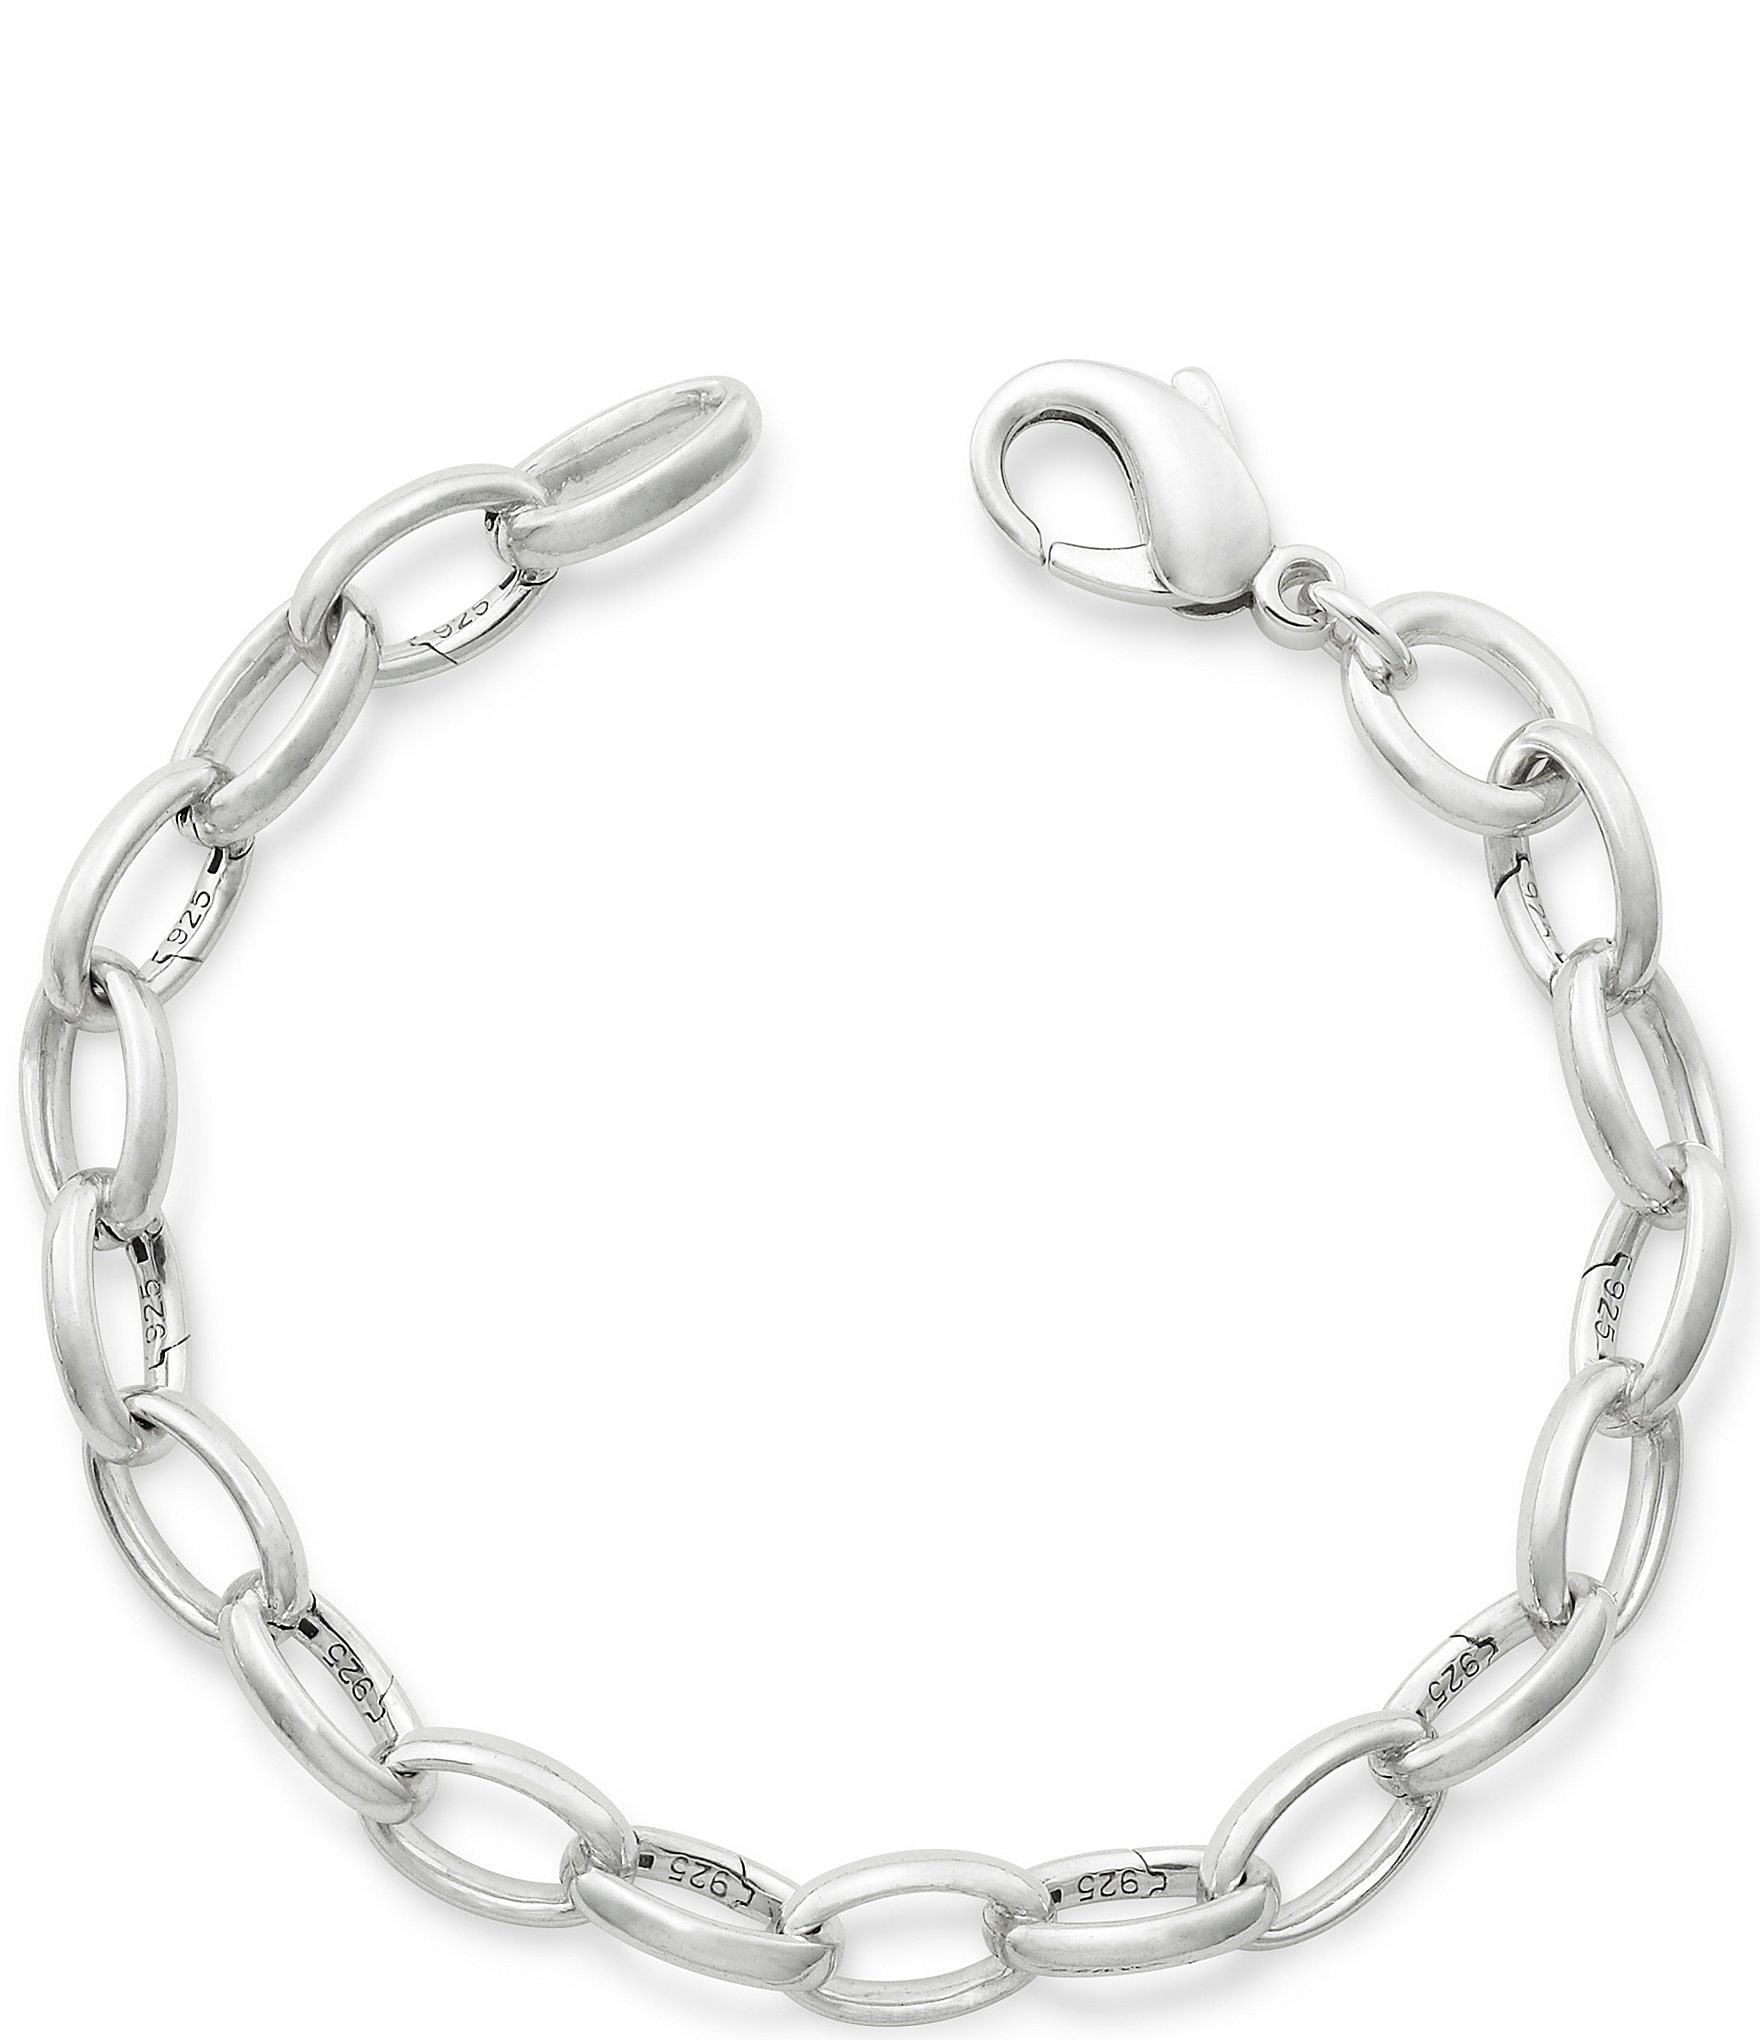 silver and pink Panda style charm bracelet 8.5